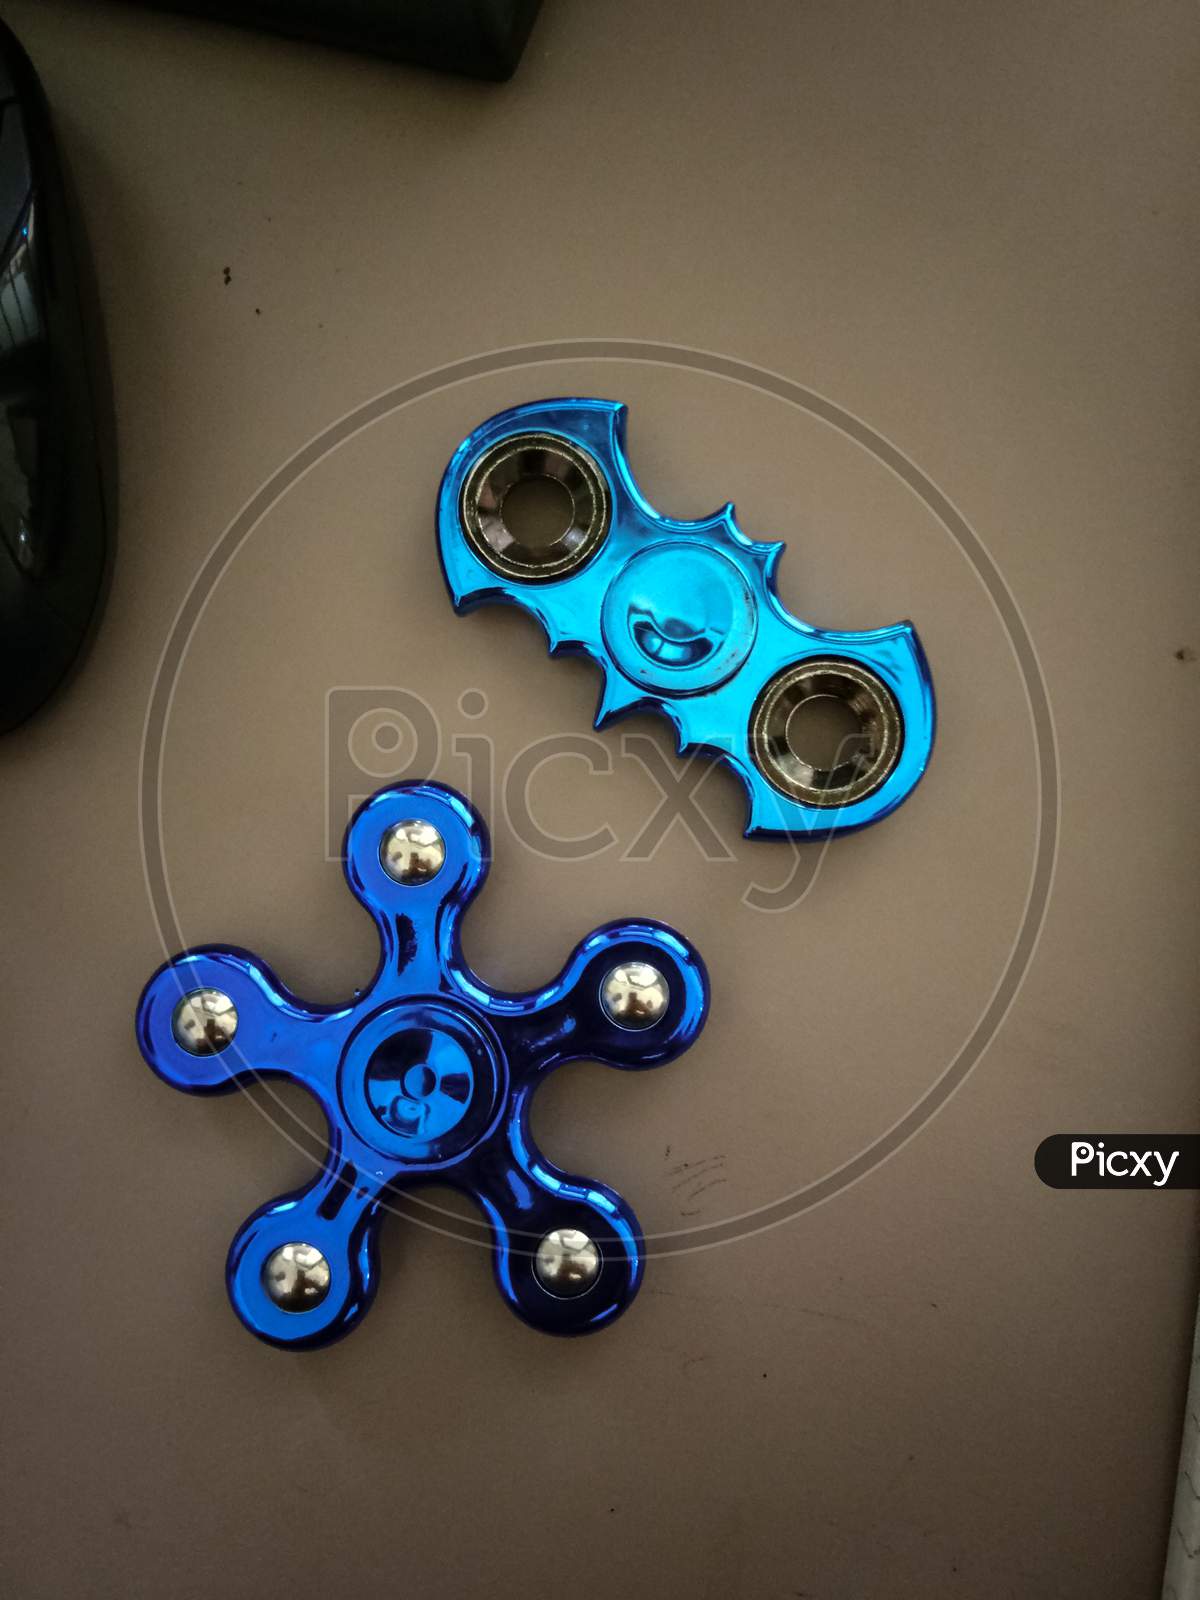 Blue and Sky blue Fidget spinner, Batman and Star shape